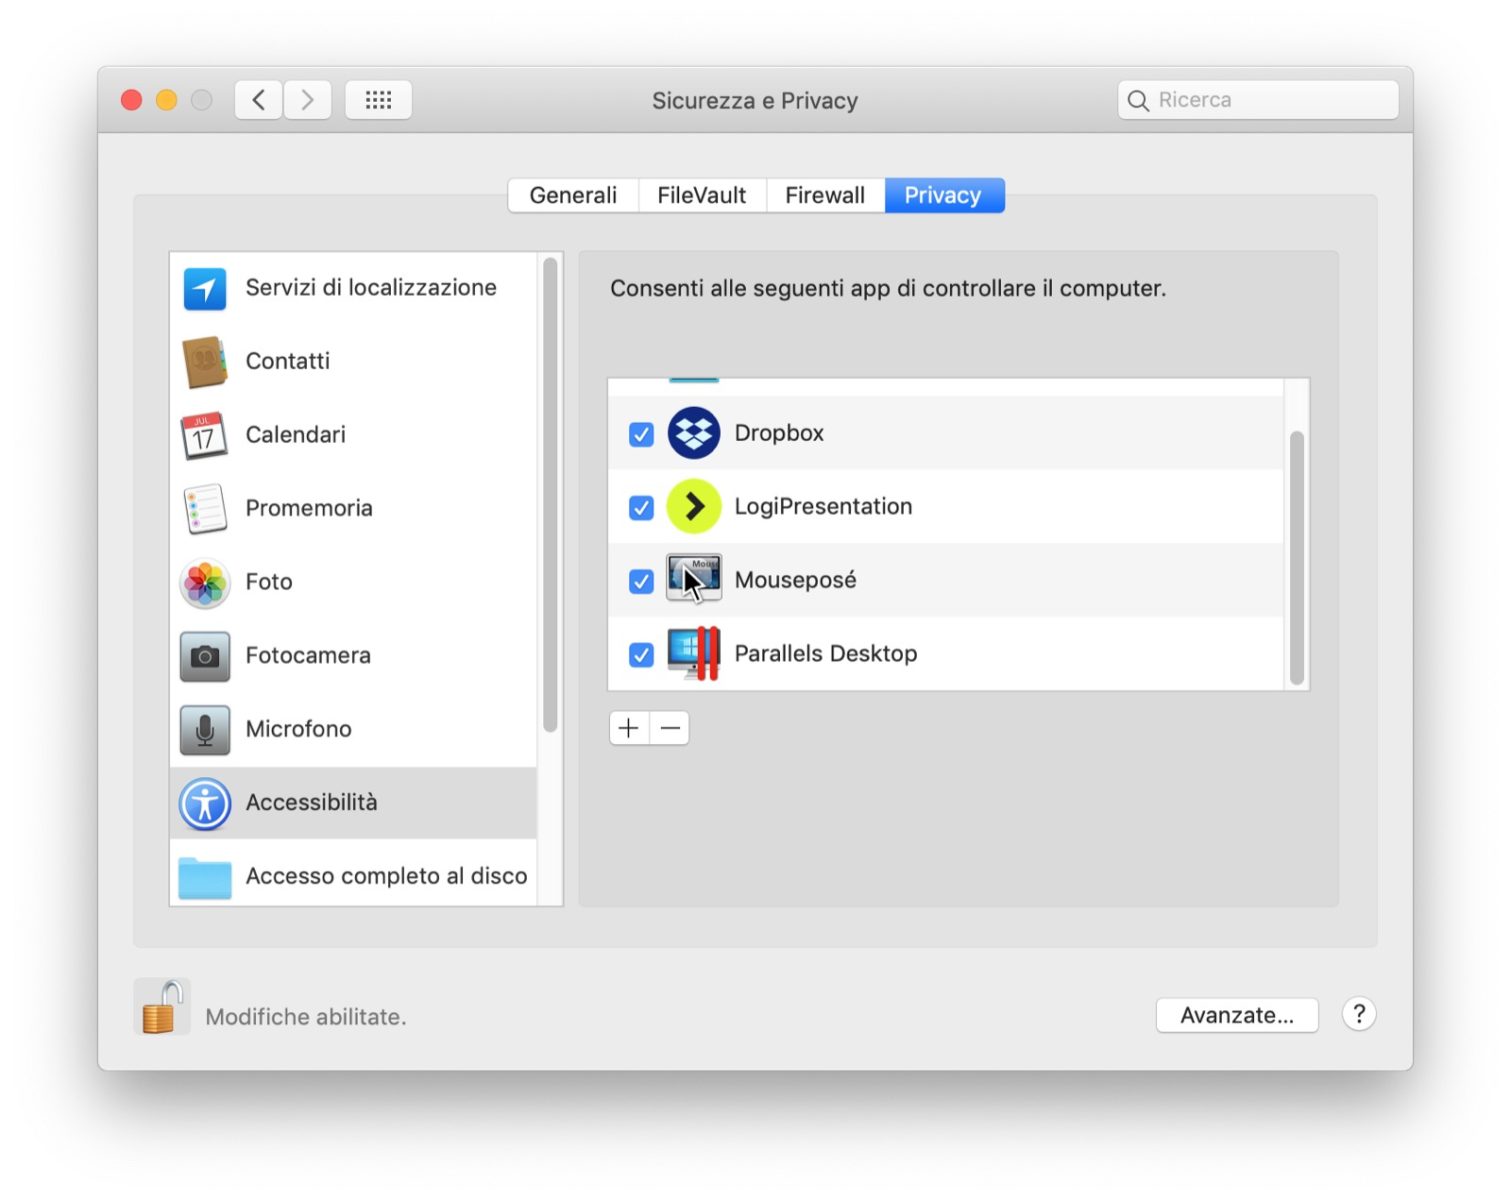 parallels desktop for mac keygen